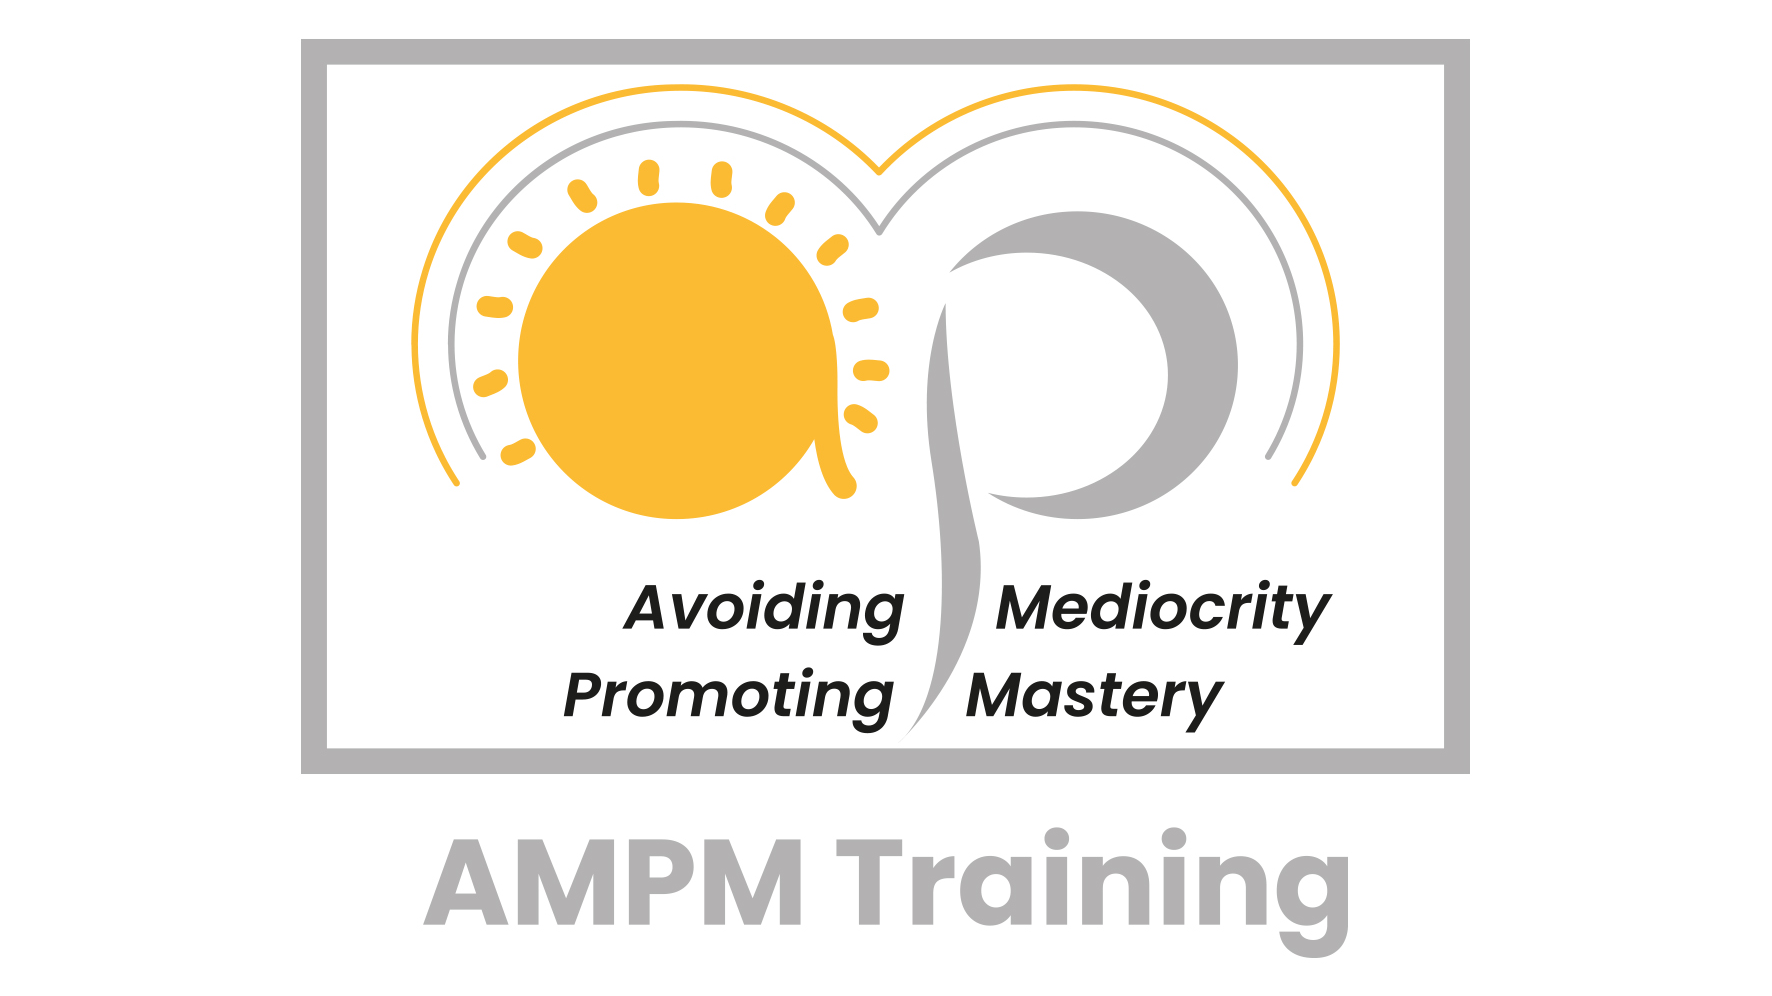 AMPM training logo